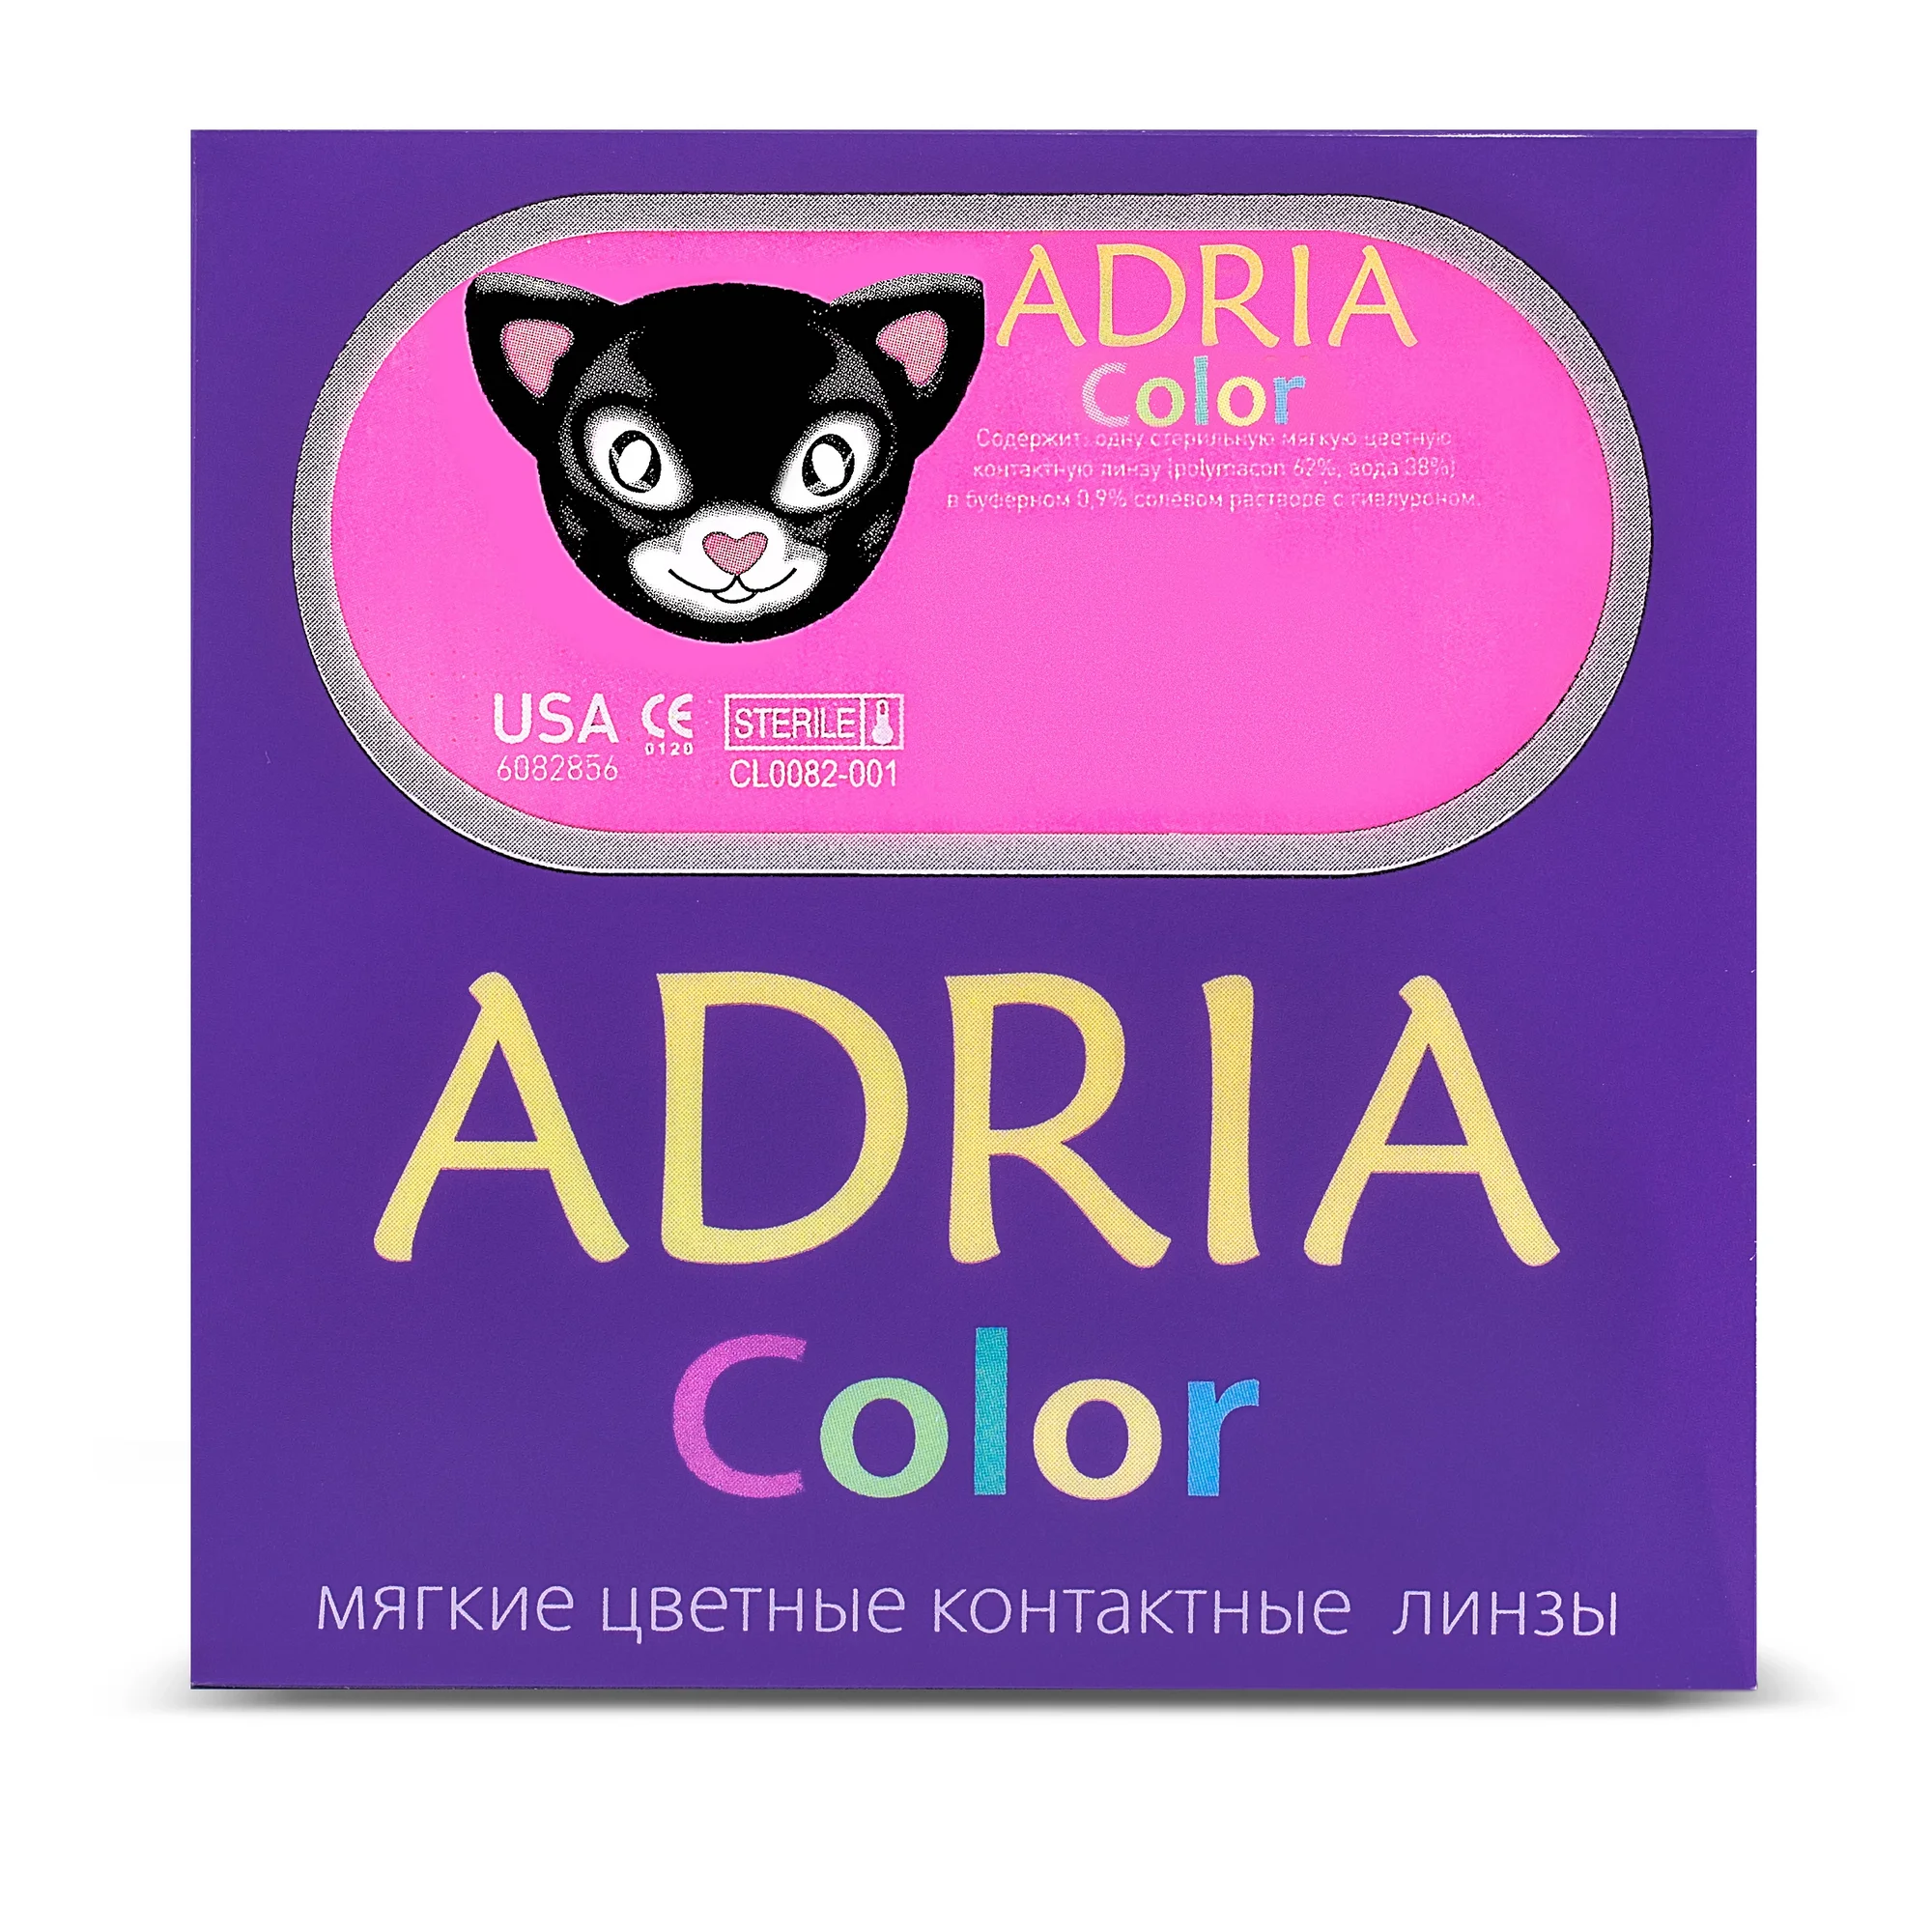 COLOR BOX ADRIA Color 3 Tone True Sapphire (голубой)